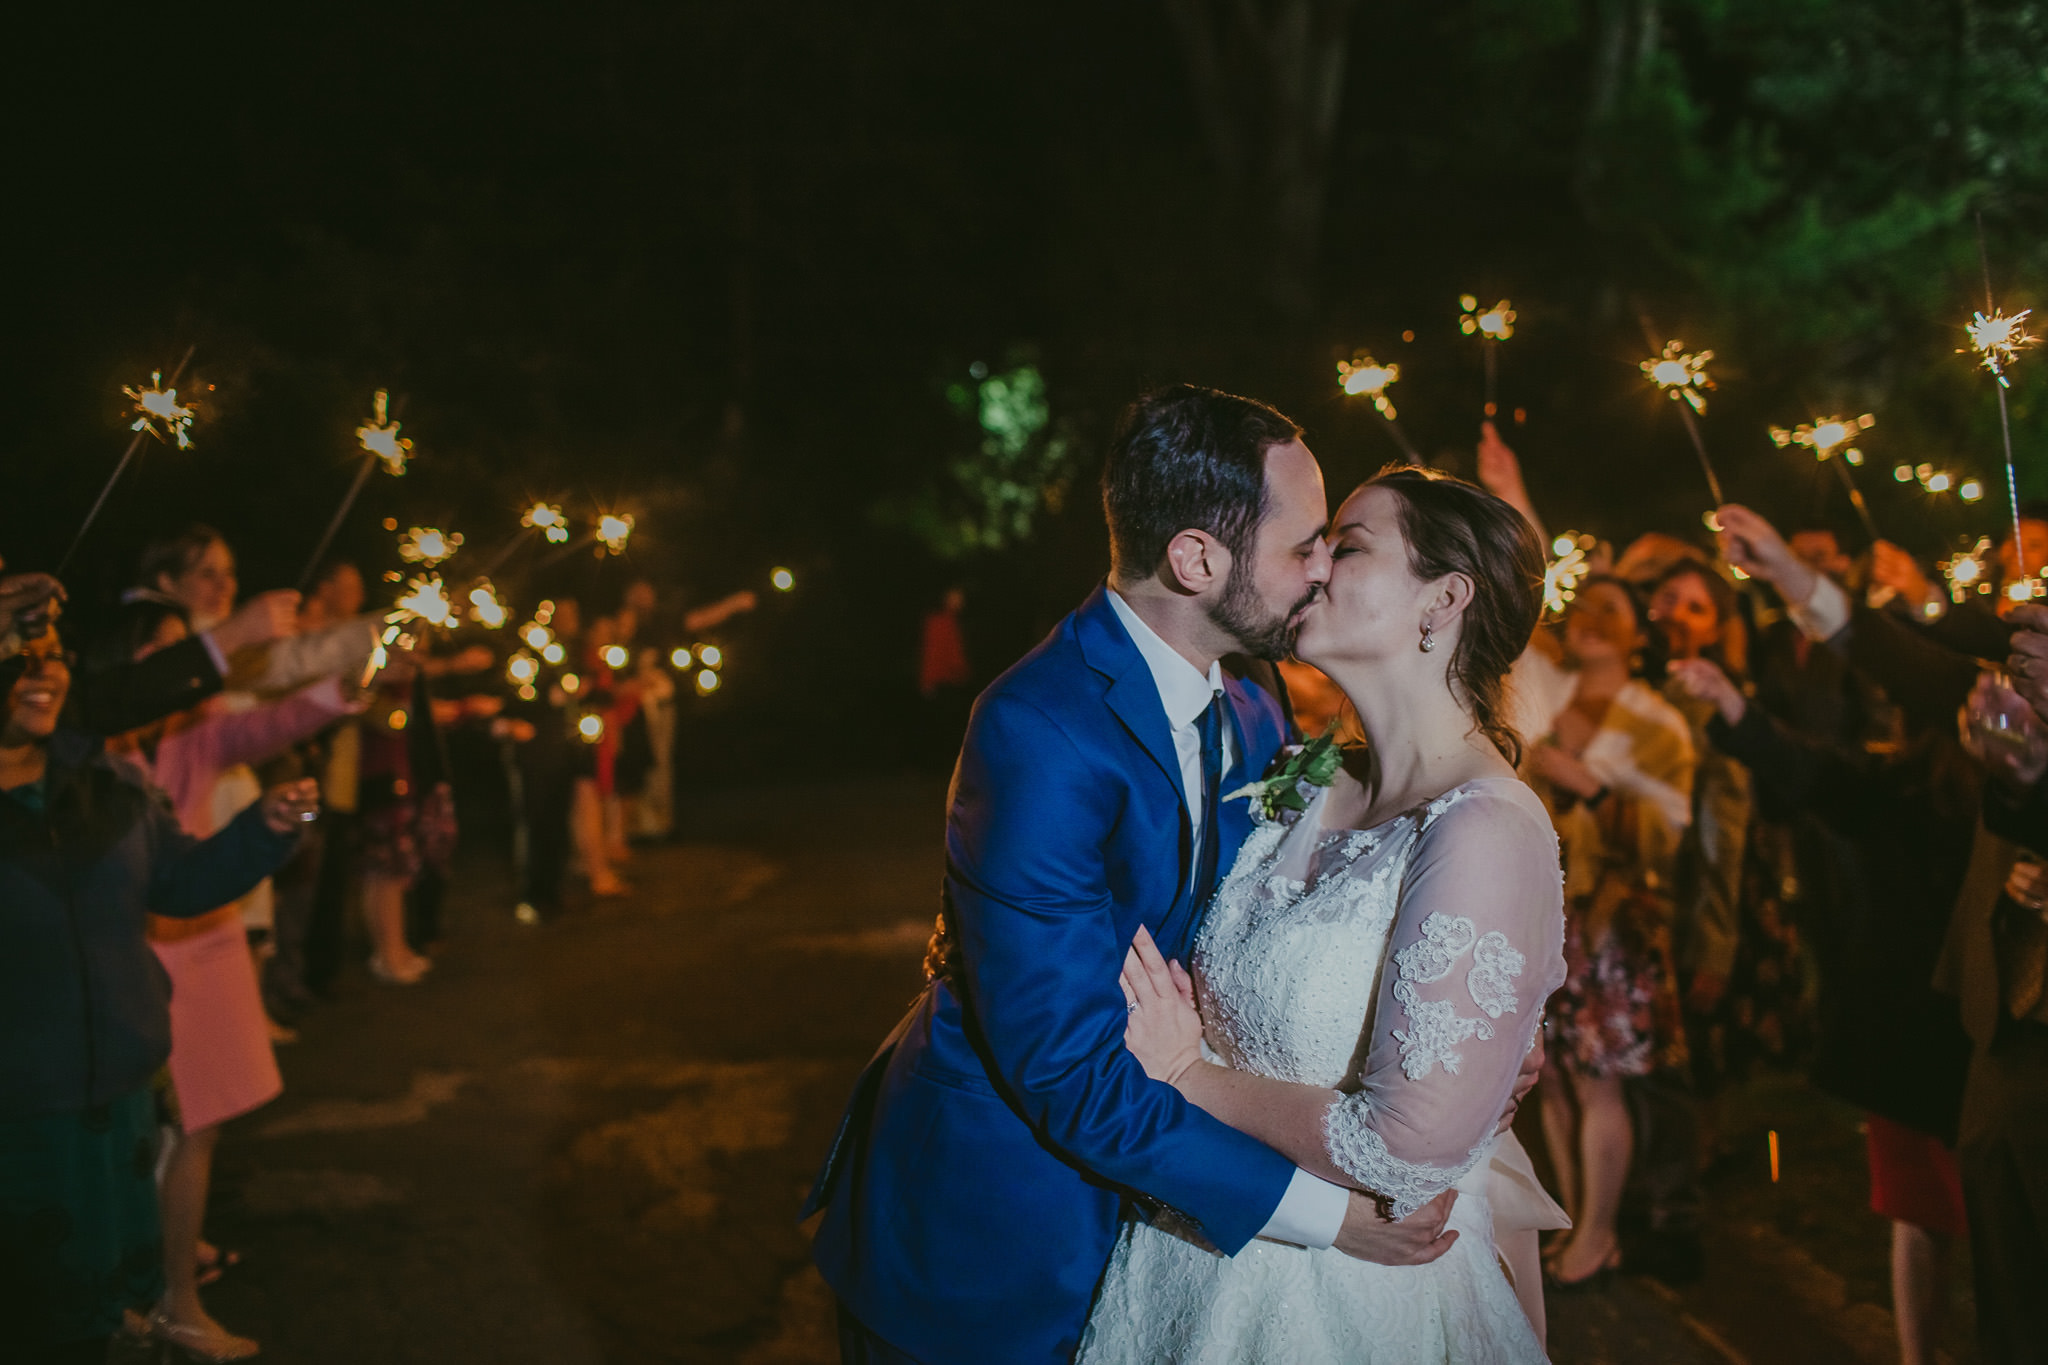 Sparklers light up the night as Lauren & Jeff exit their Glen Foerd wedding